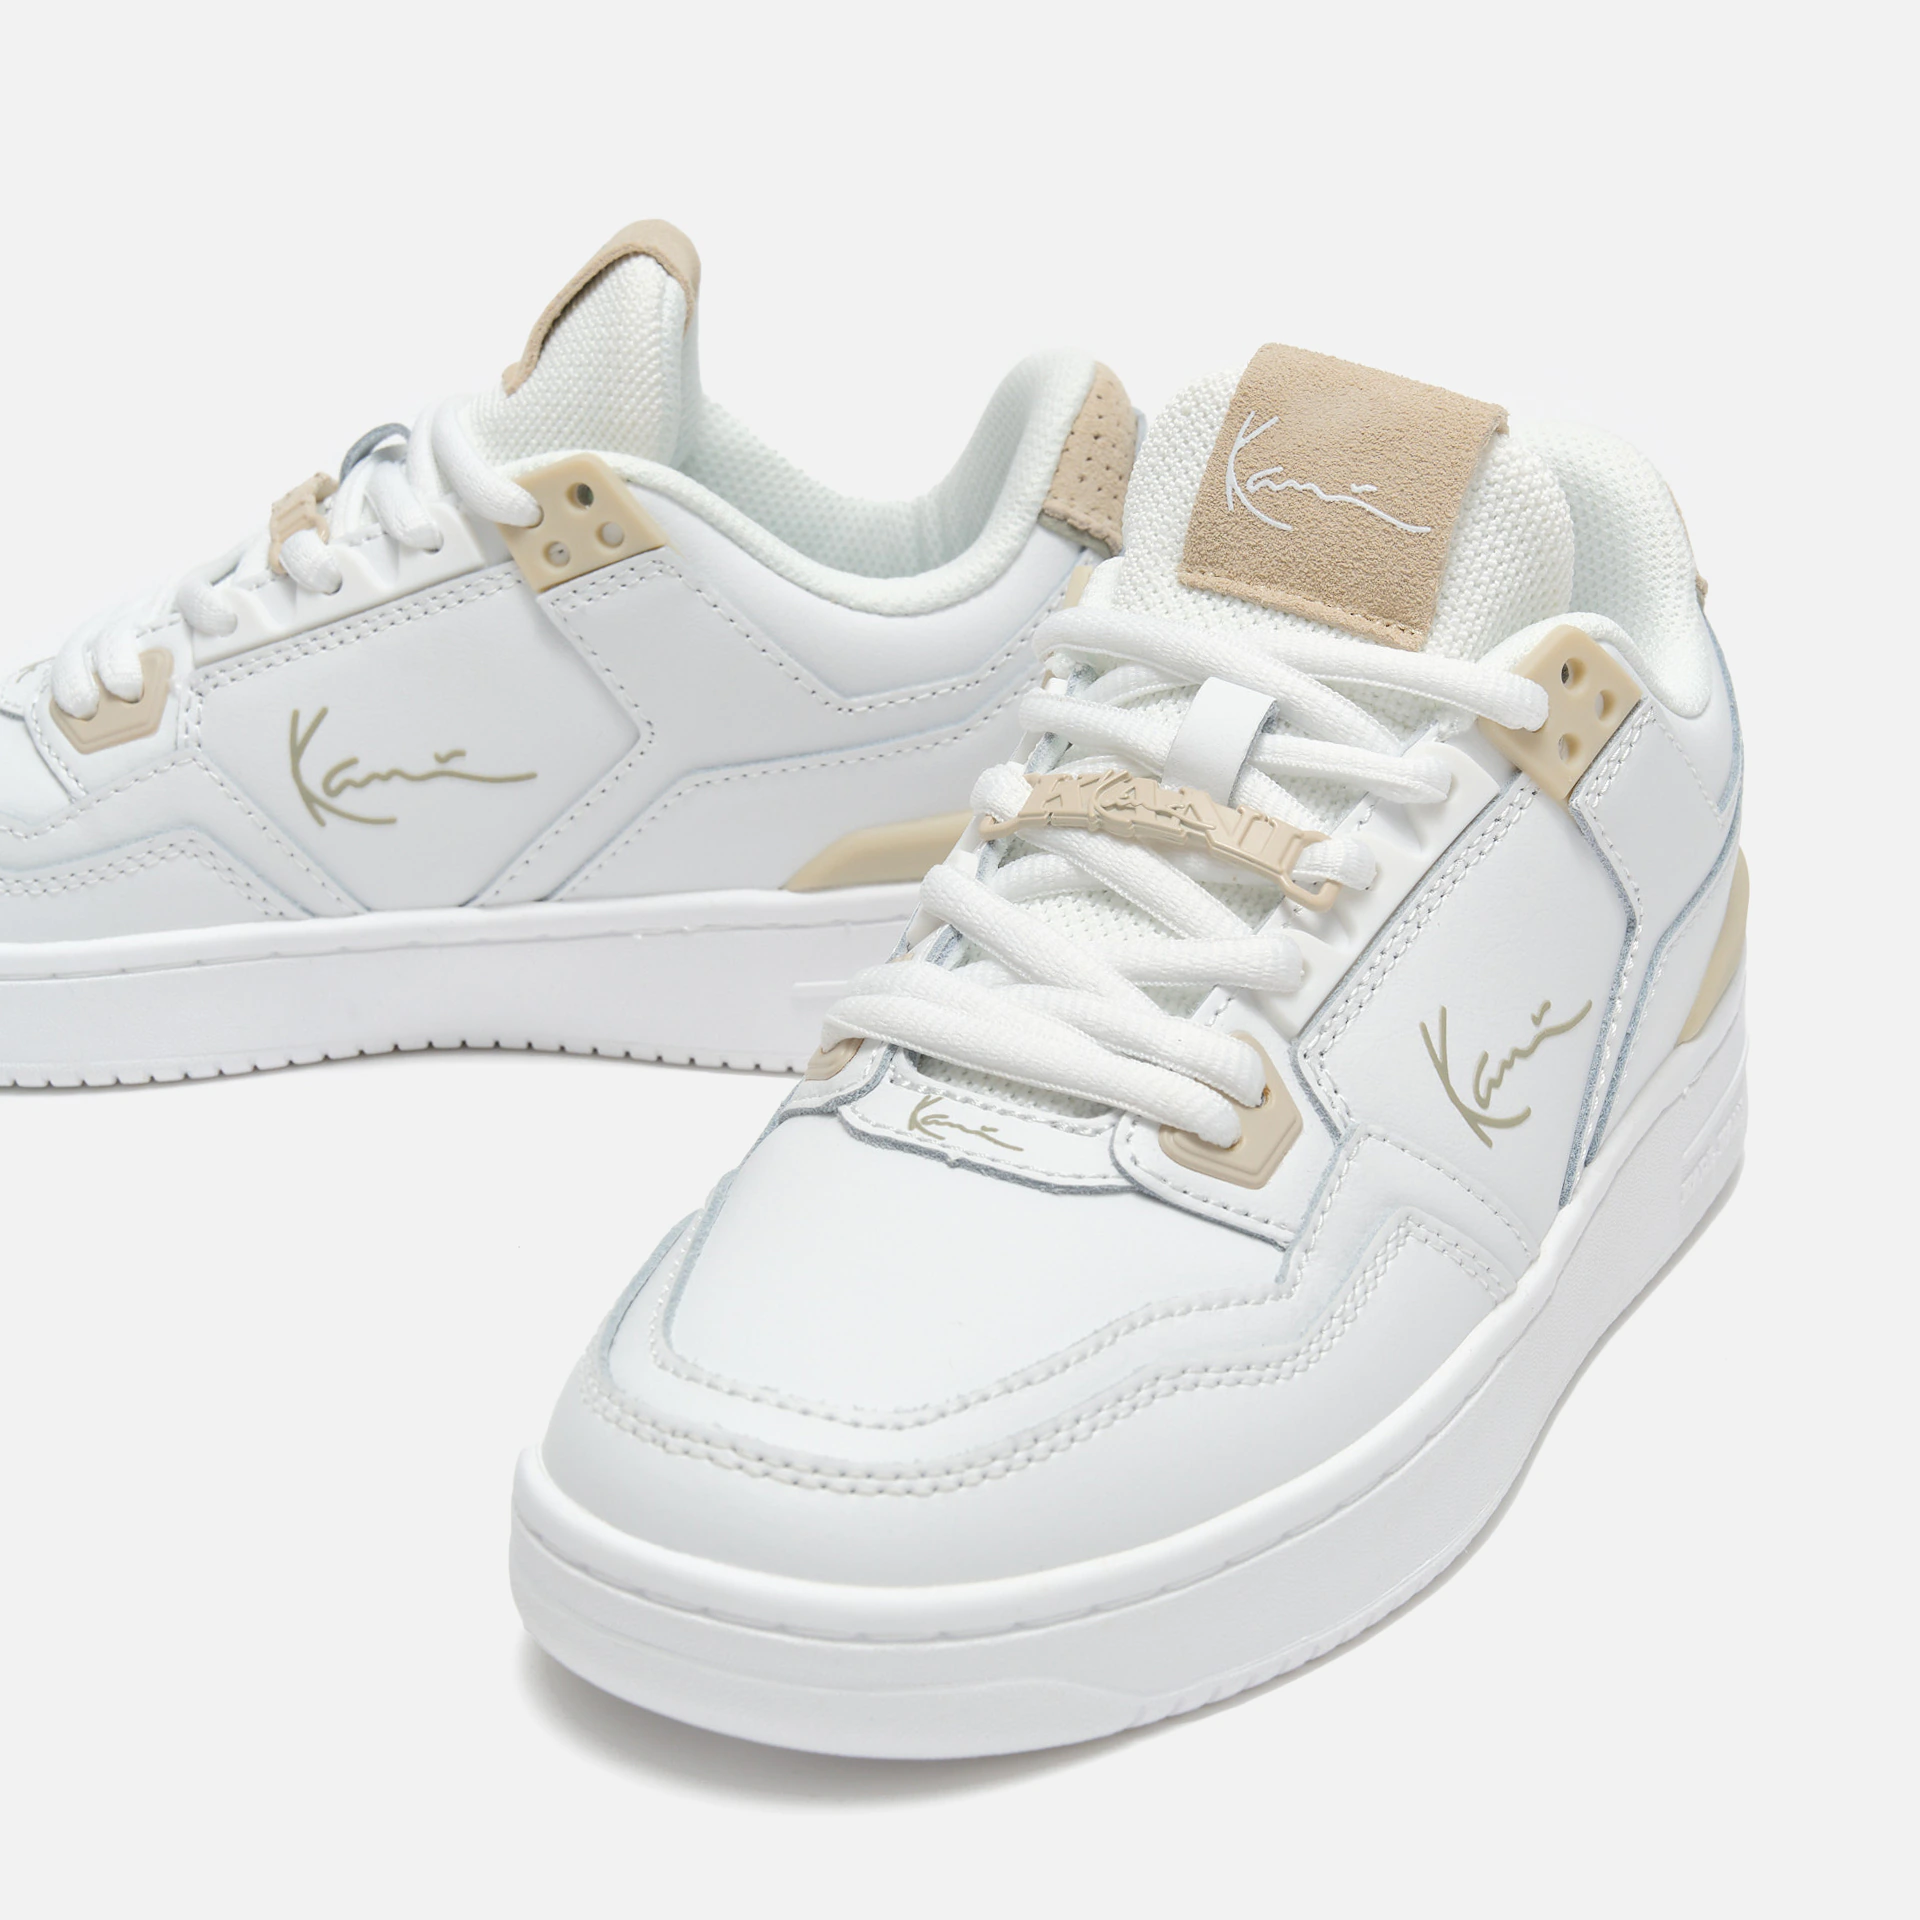 Karl Kani 89 LXRY Sneaker White/Beige